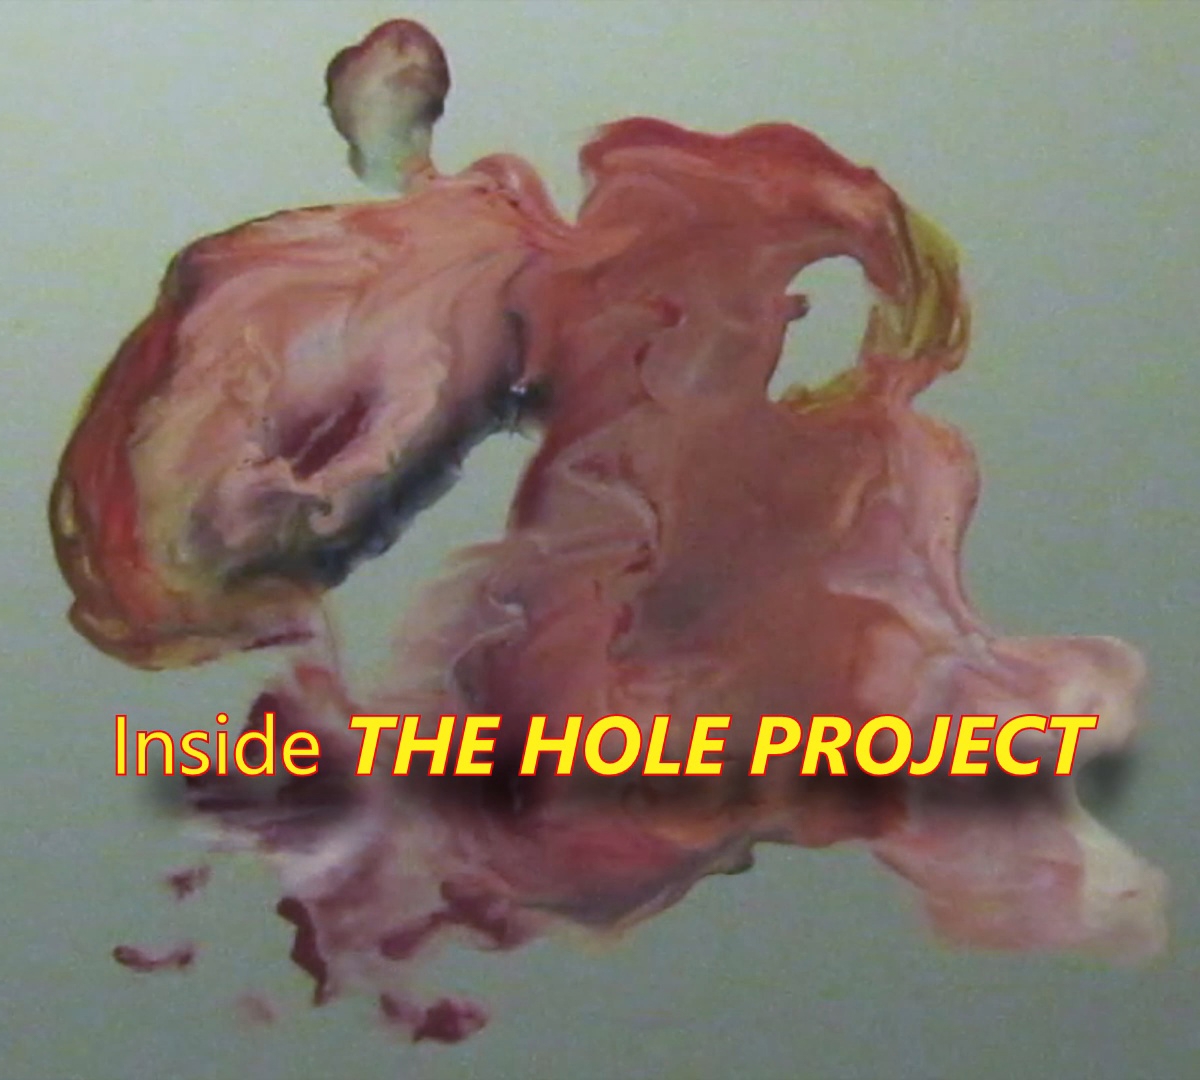 https://ollomart.com/wp-content/uploads/2021/07/Inside-the-Hole-Project-PIC.jpg